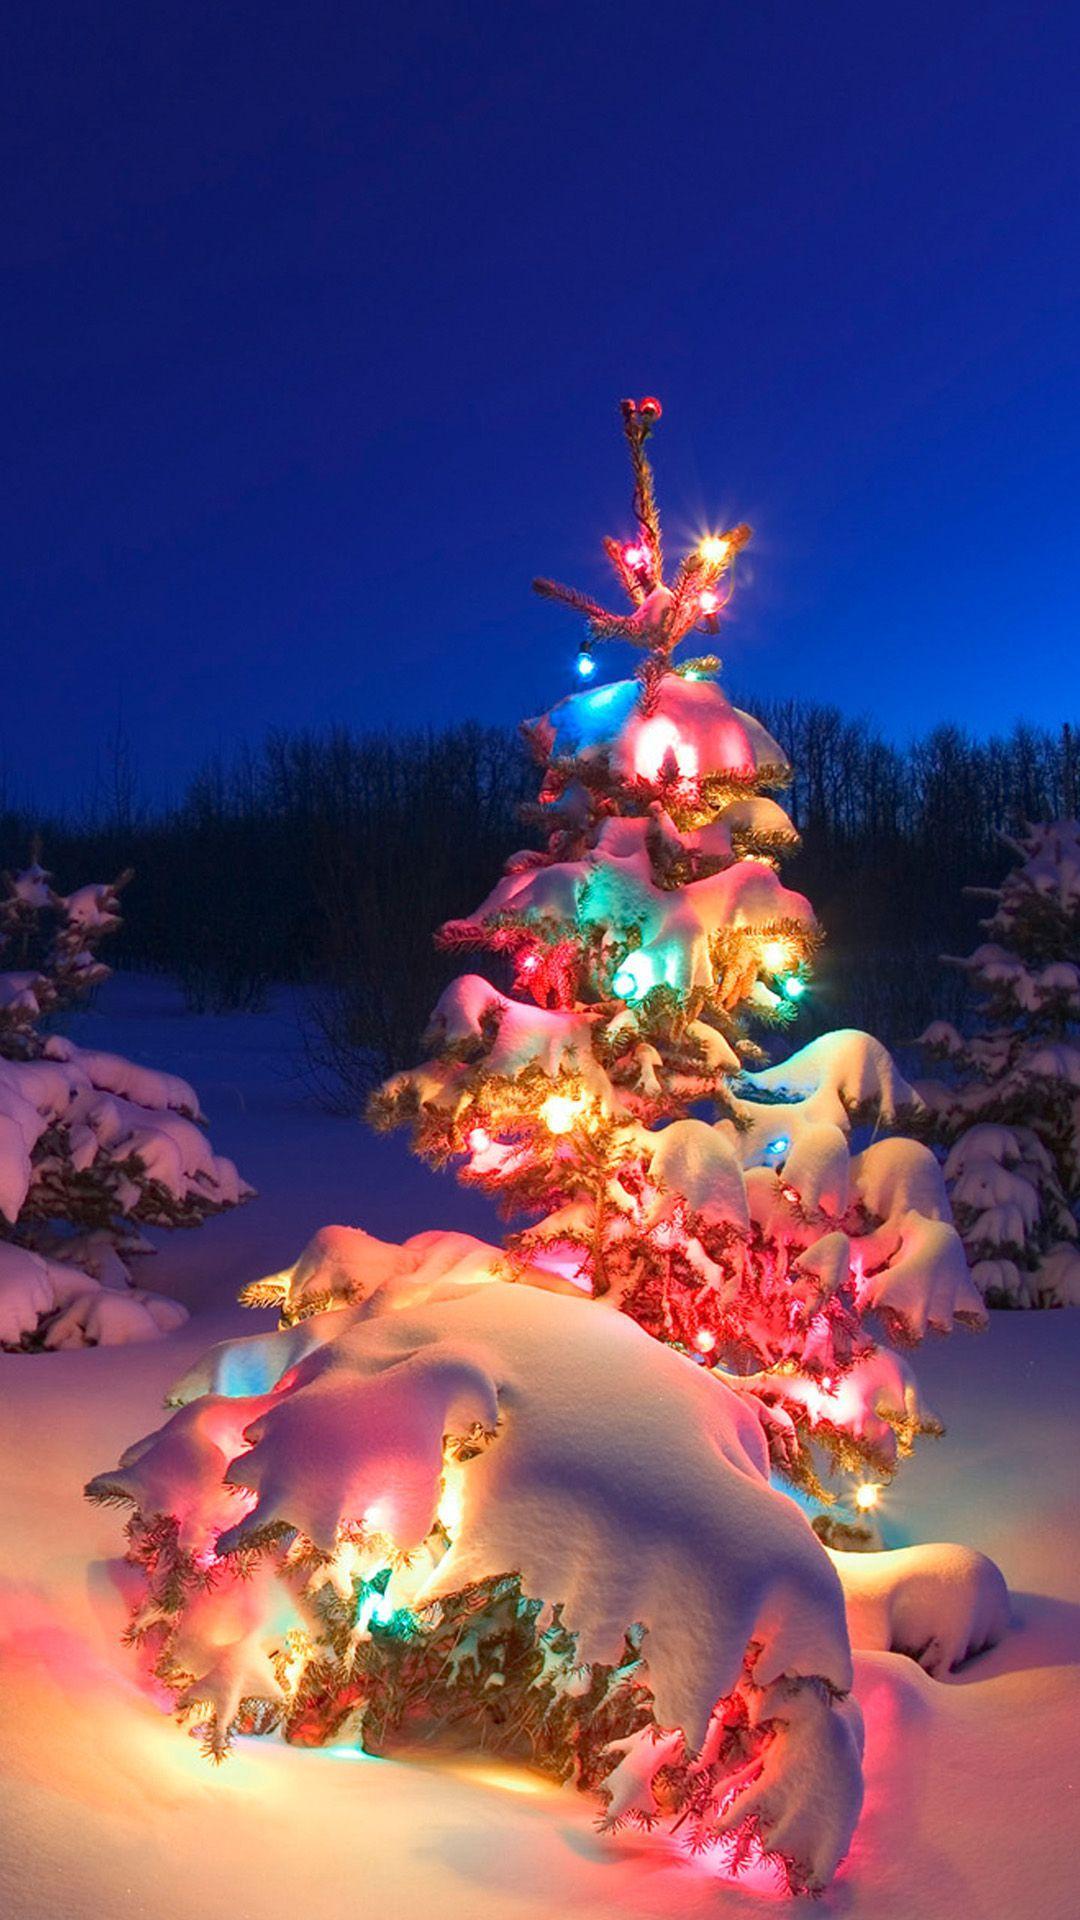 Samsung Galaxy S5 Wallpaper. Christmas lights wallpaper, Christmas tree photography, Christmas scenes